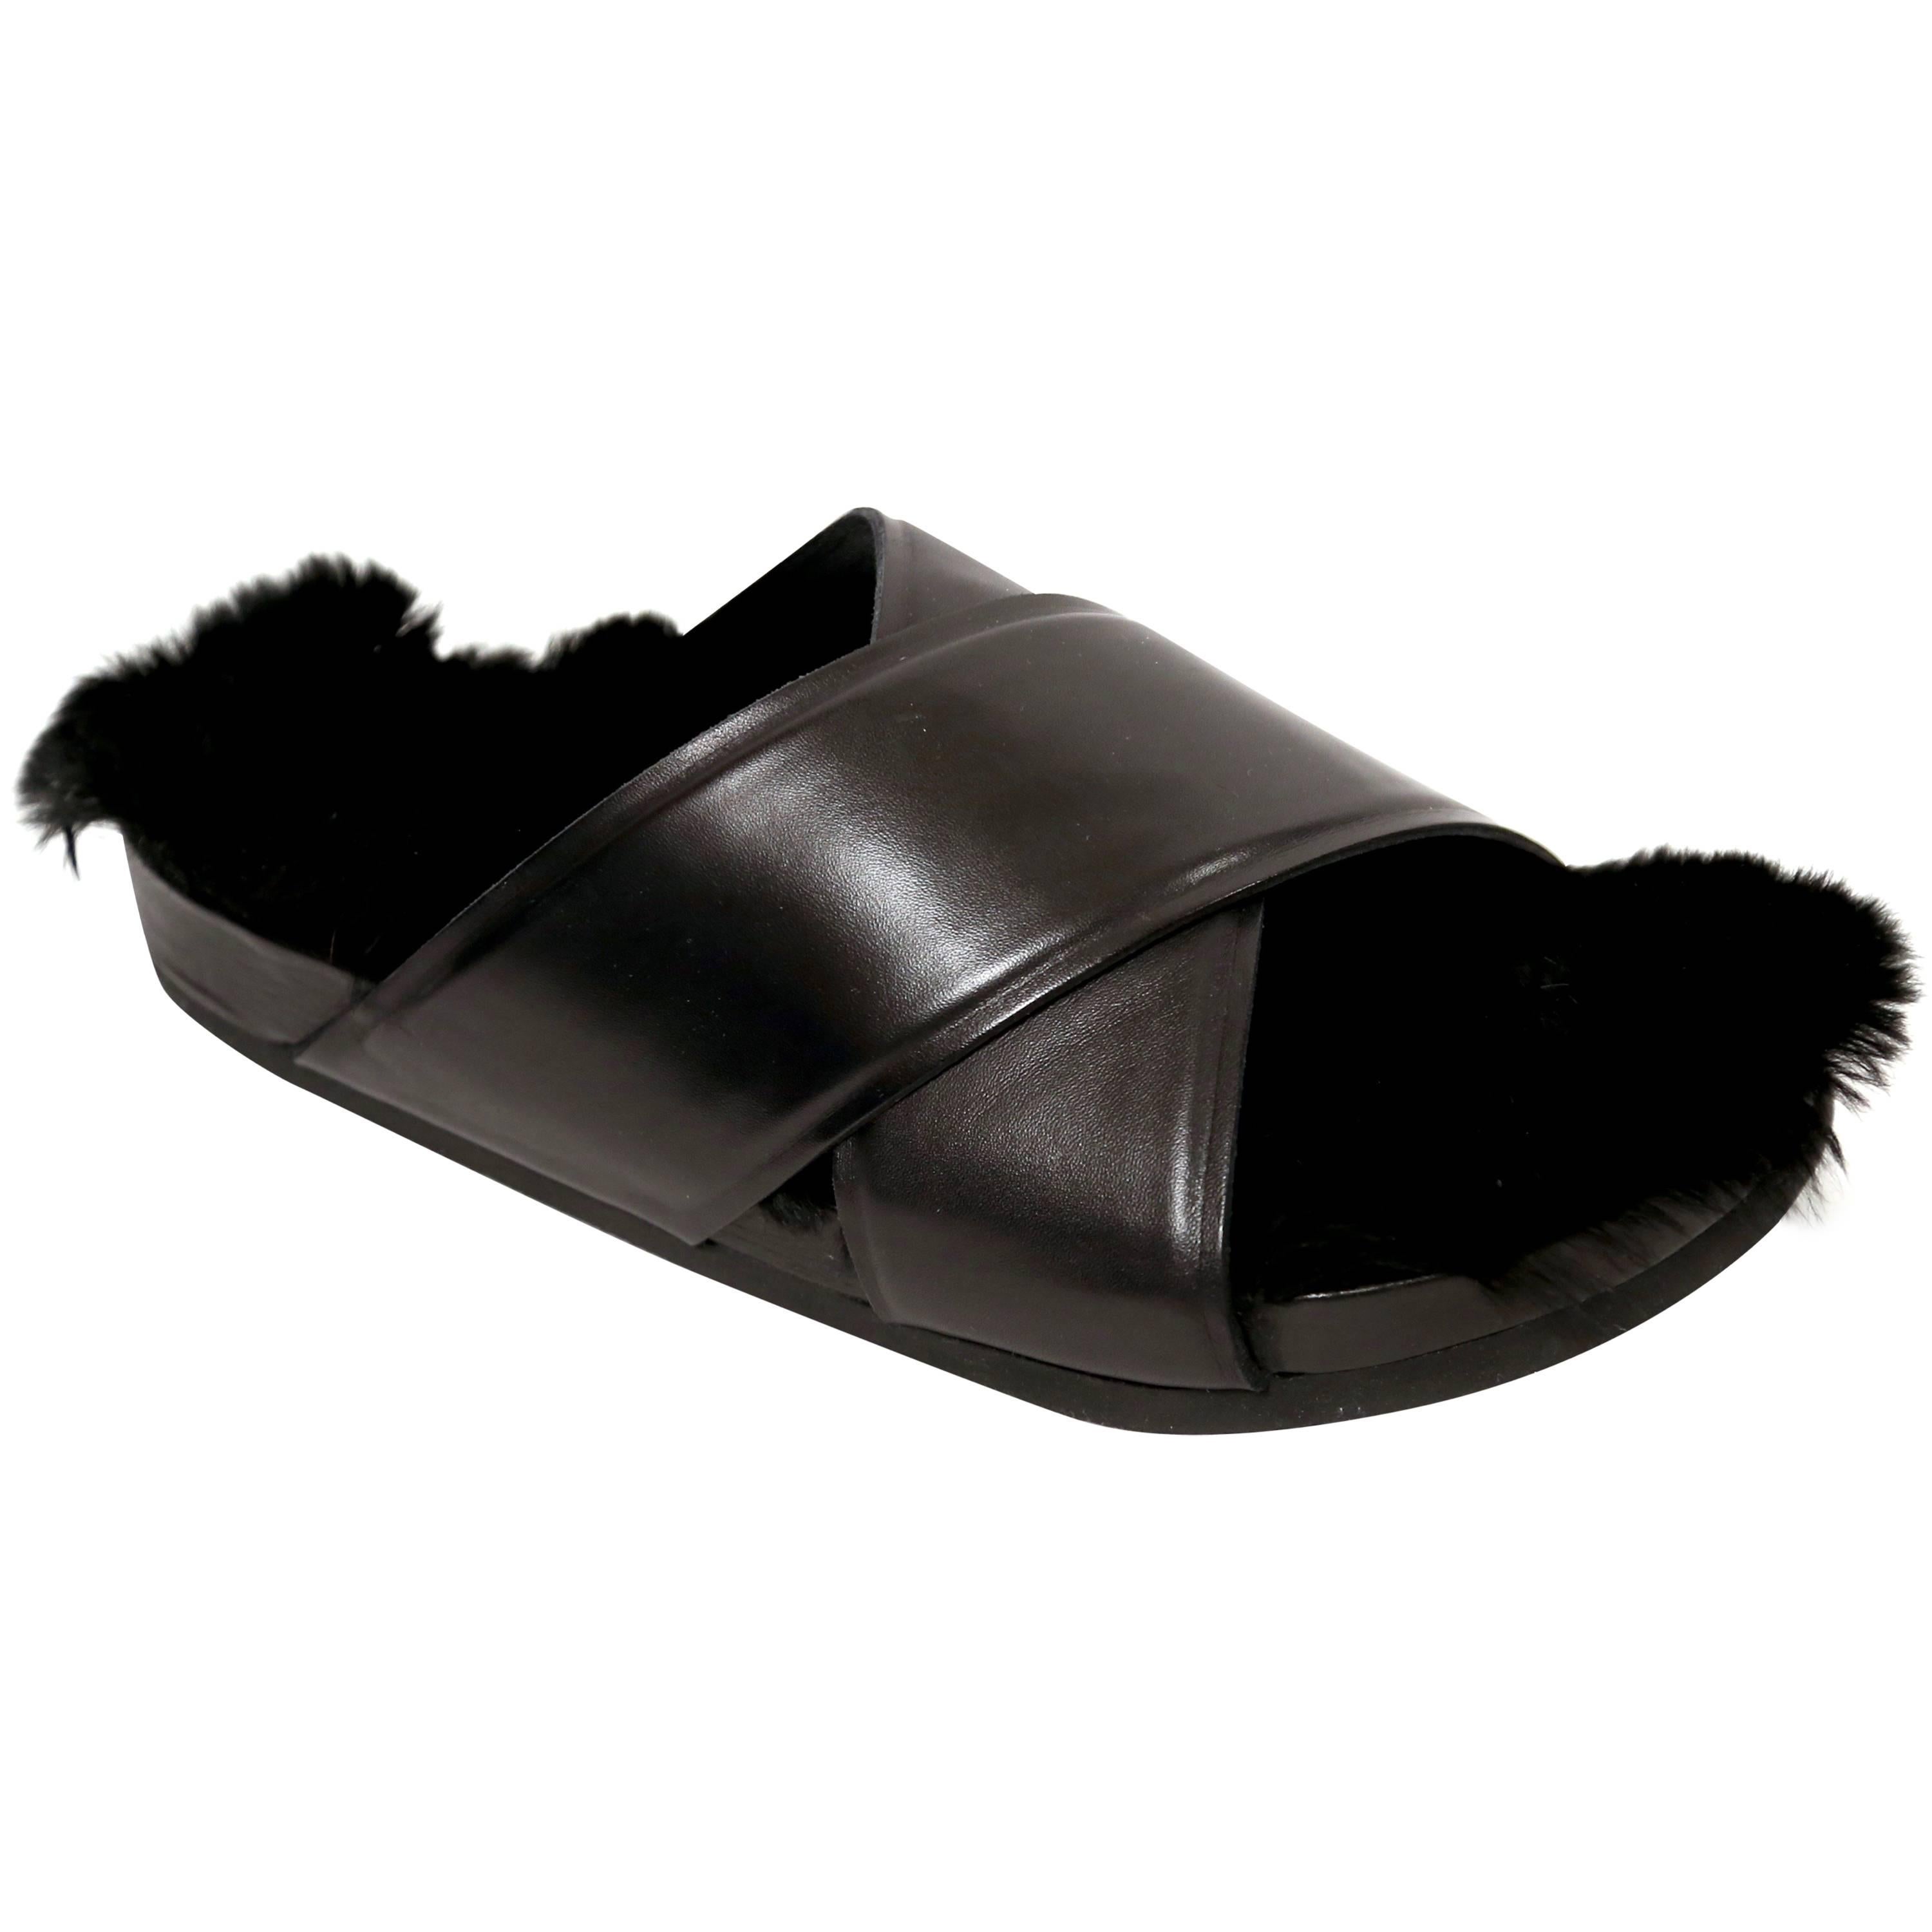 2013 CELINE by PHOEBE PHILOE black furkenstock sandals 41 NEW